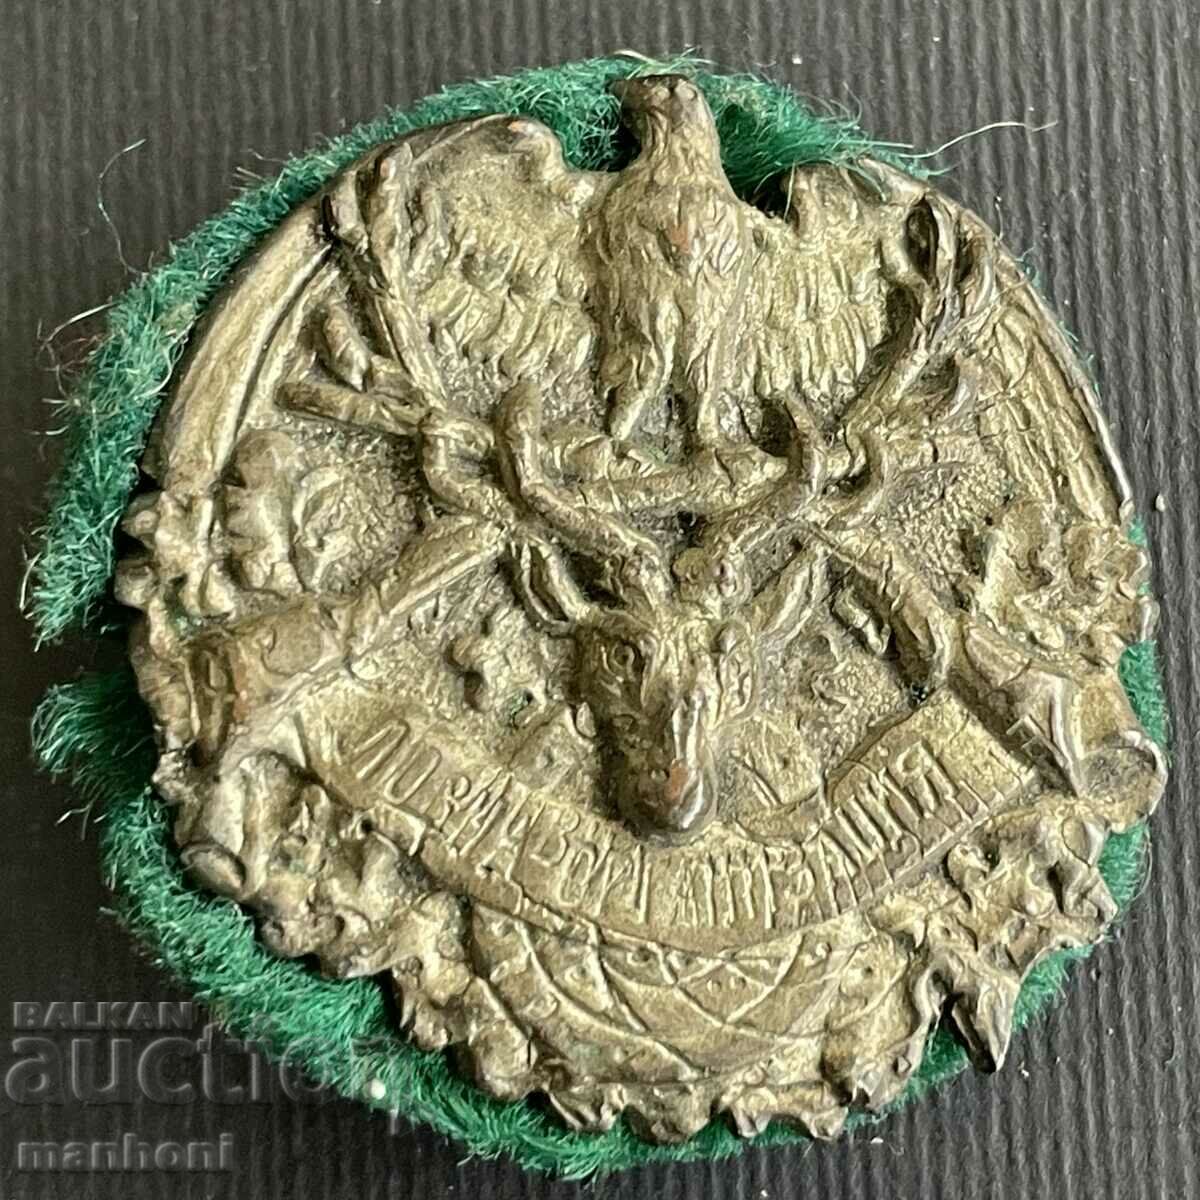 5594 Kingdom of Bulgaria badge member of the Hunting Organization 1930s